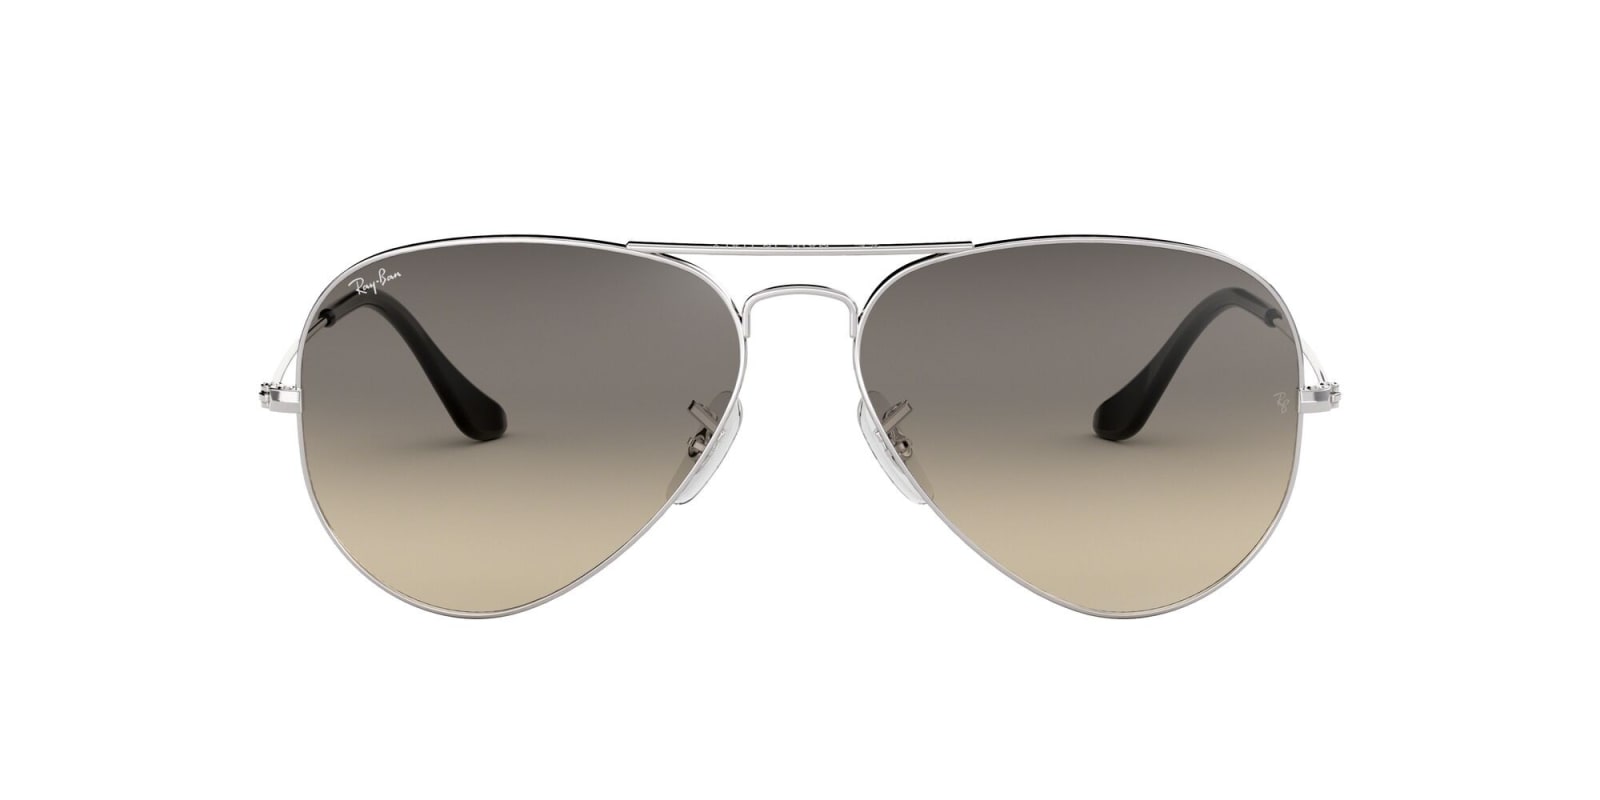 Ray Ban Sunglasses In Gray